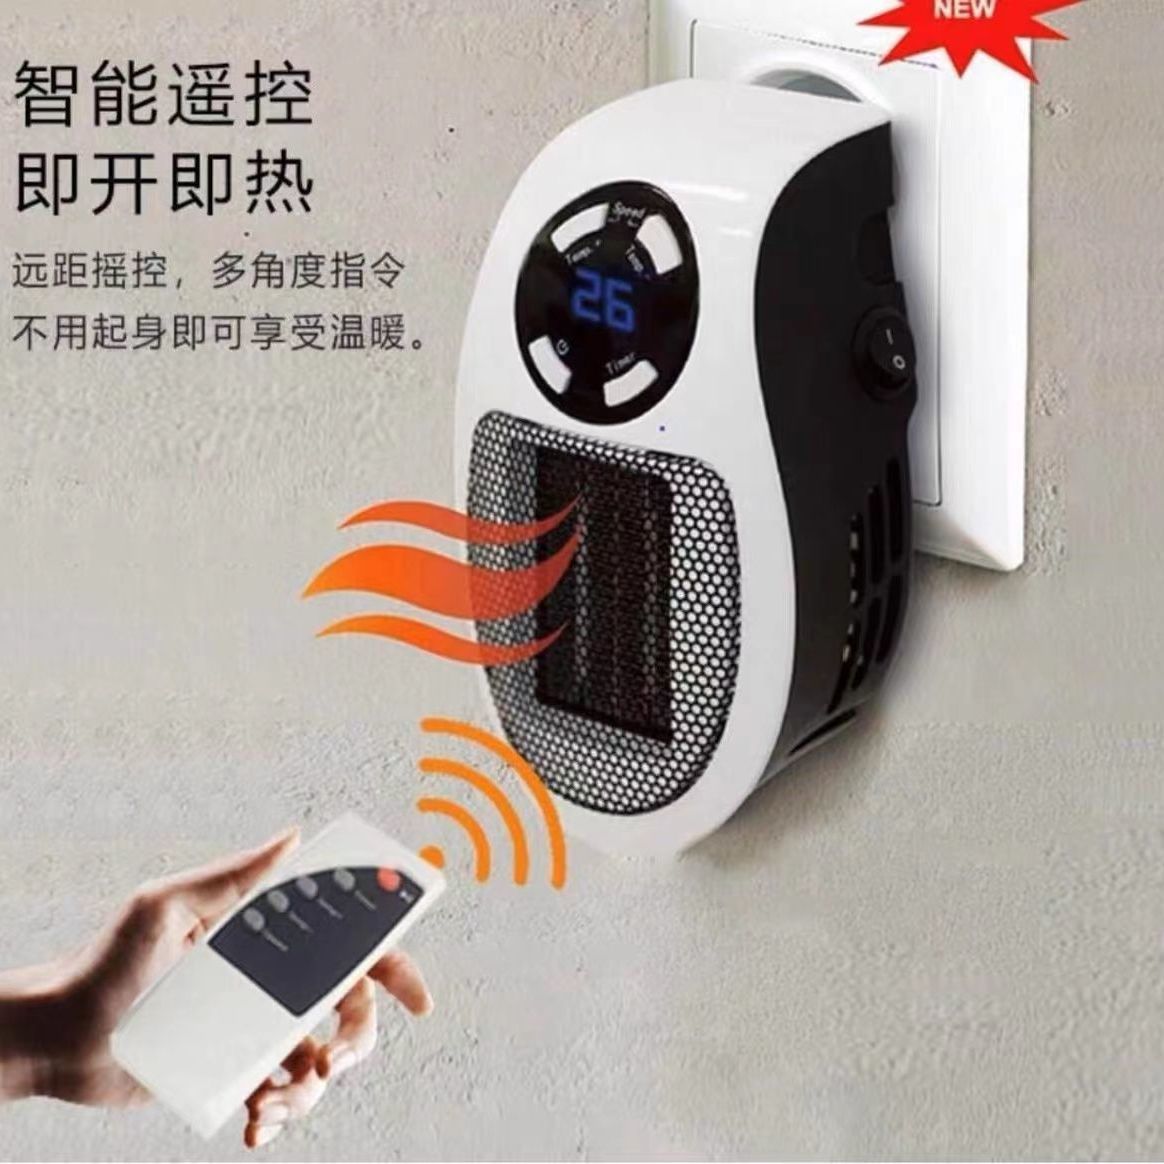 Intelligent heater remote control heater mini sun energy-saving power-saving fast heating wall-mounted bathroom heating